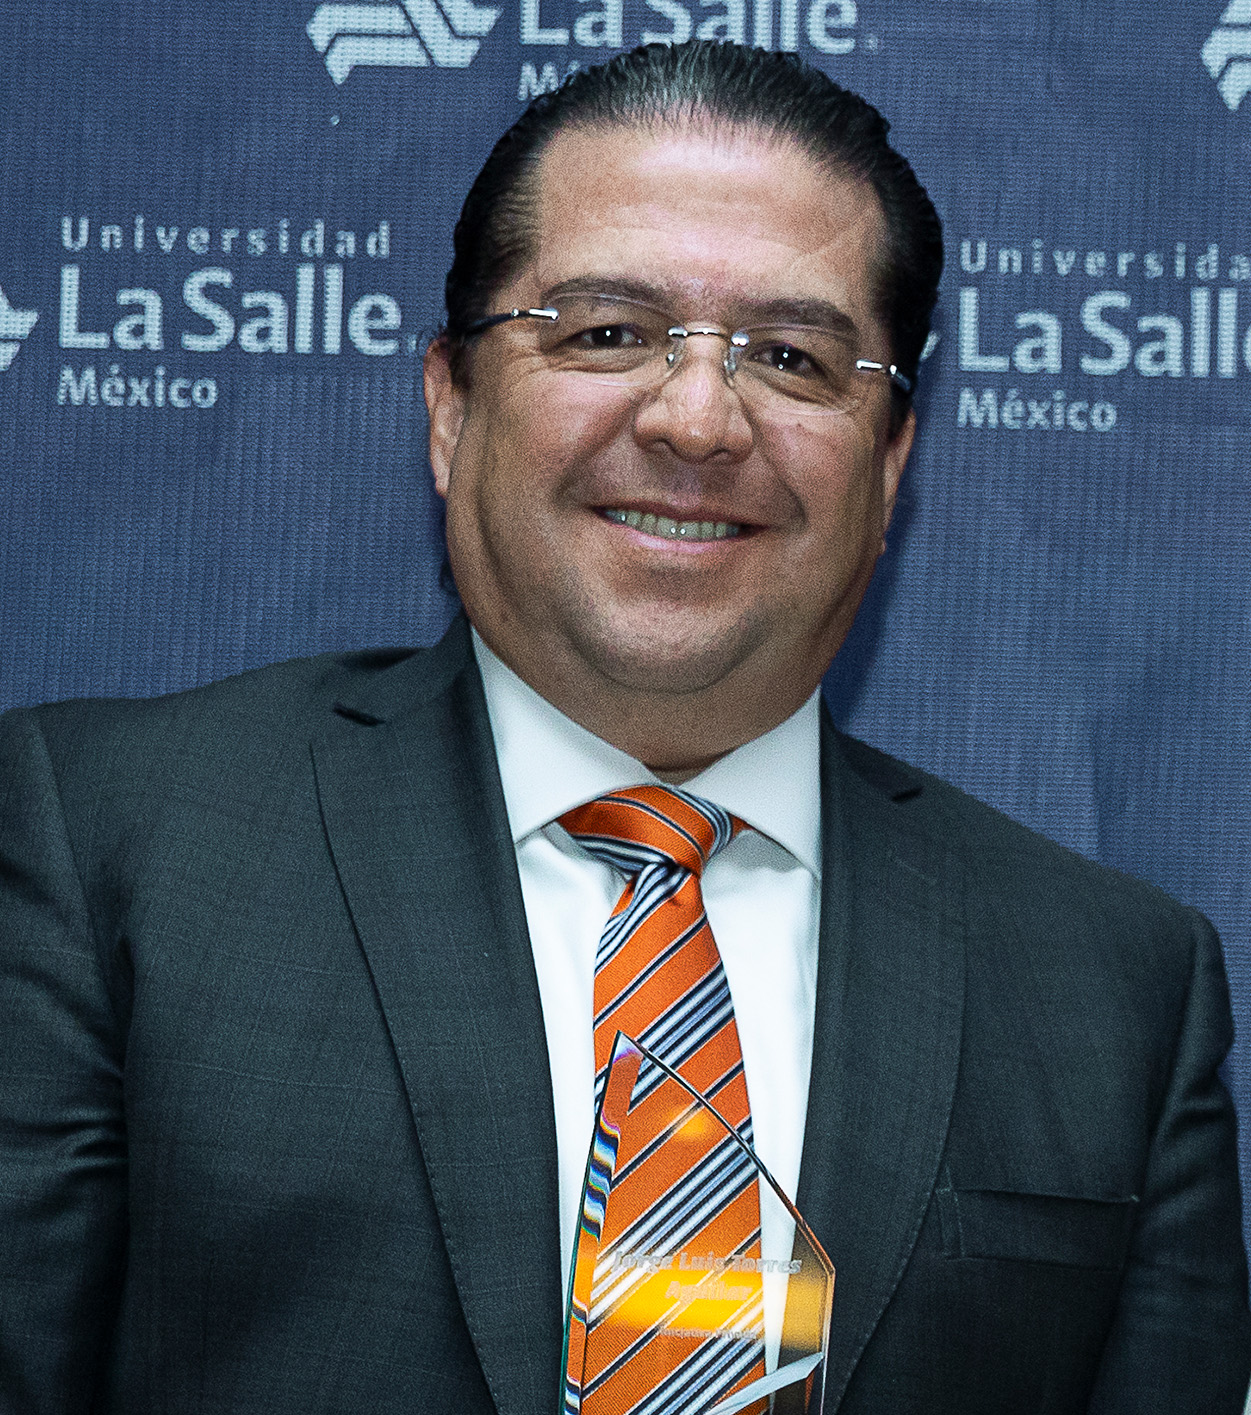 Jorge Luis Torres Aguilar